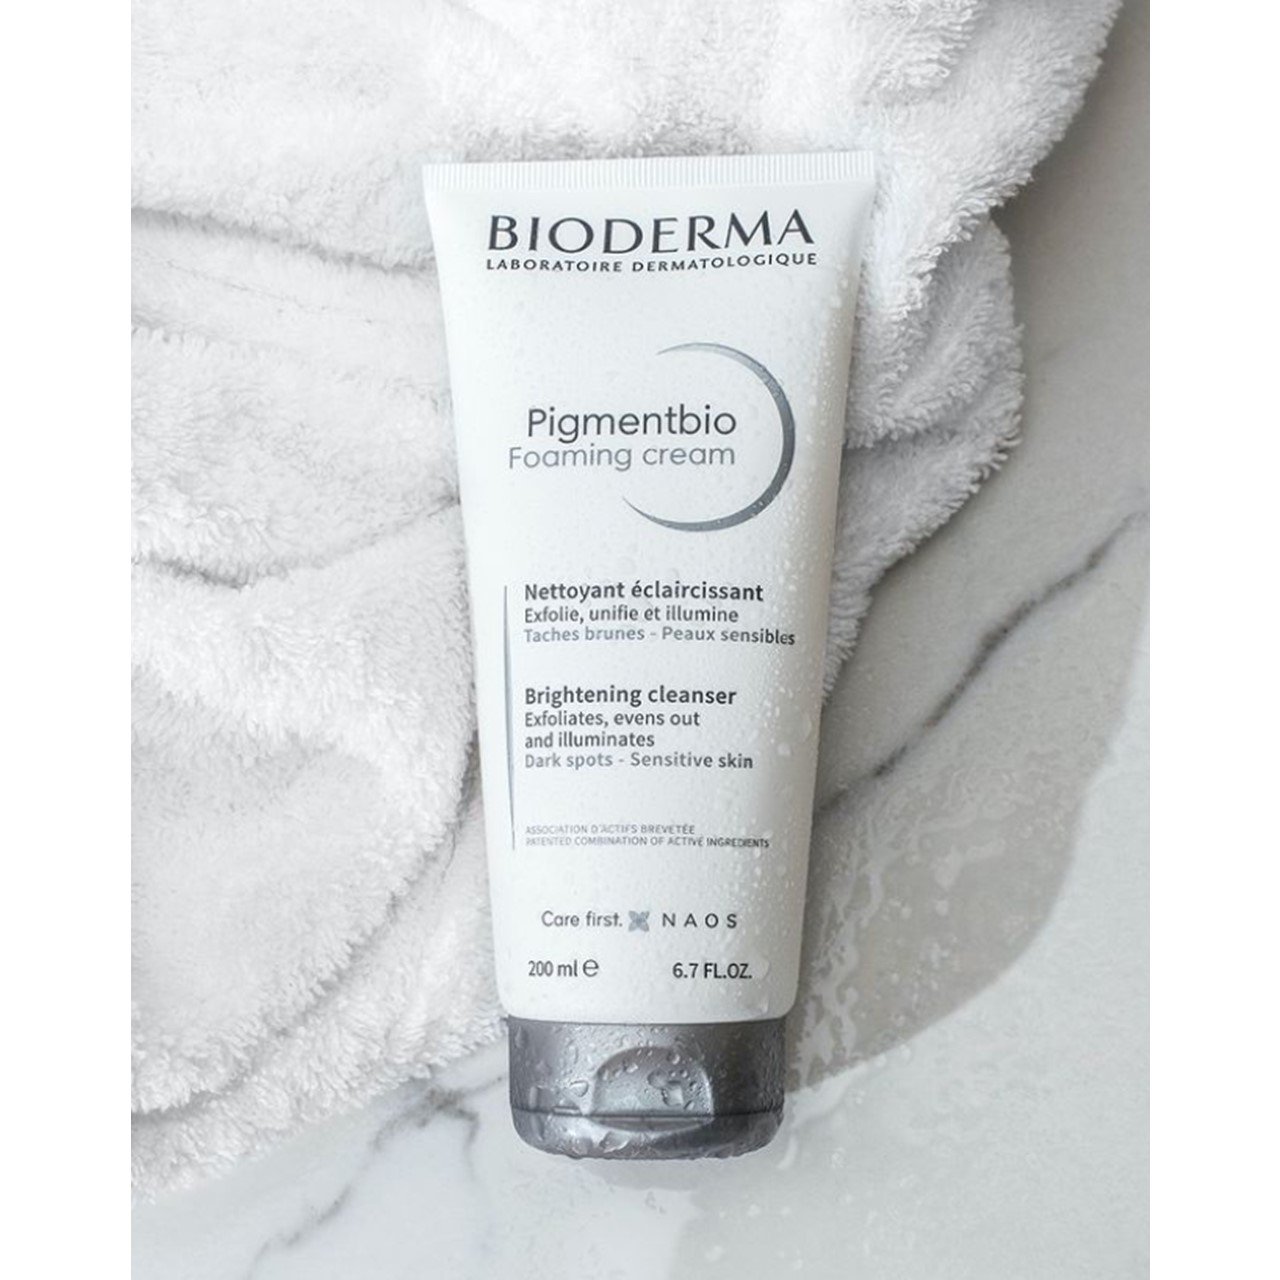 Bioderma Pigmentbio Foaming Cream 200ml (6.76fl oz)